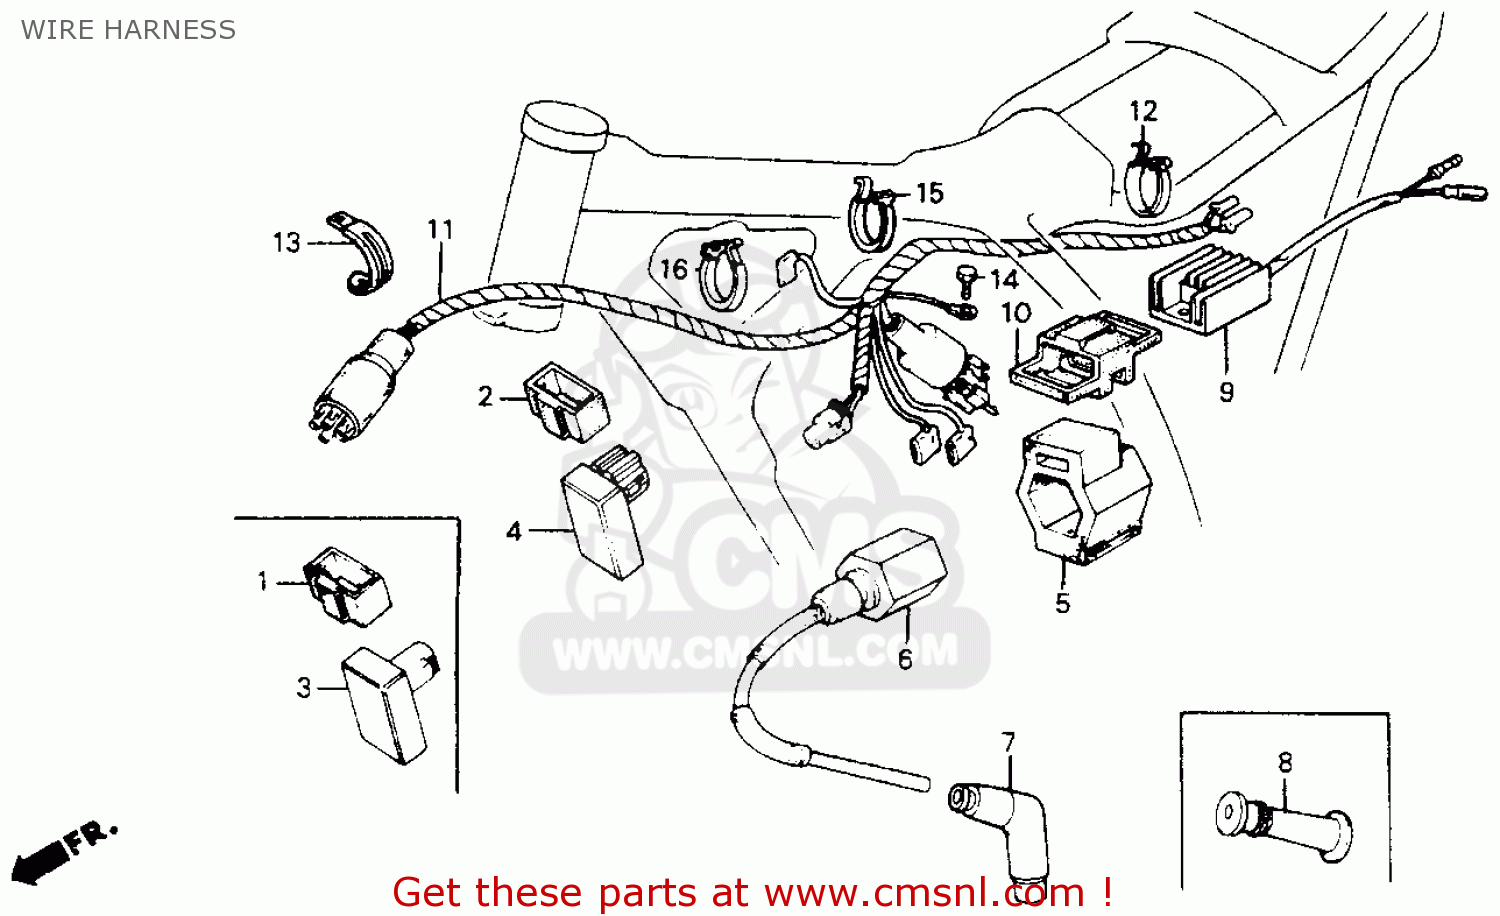 1986 Honda spree wiring diagram #6